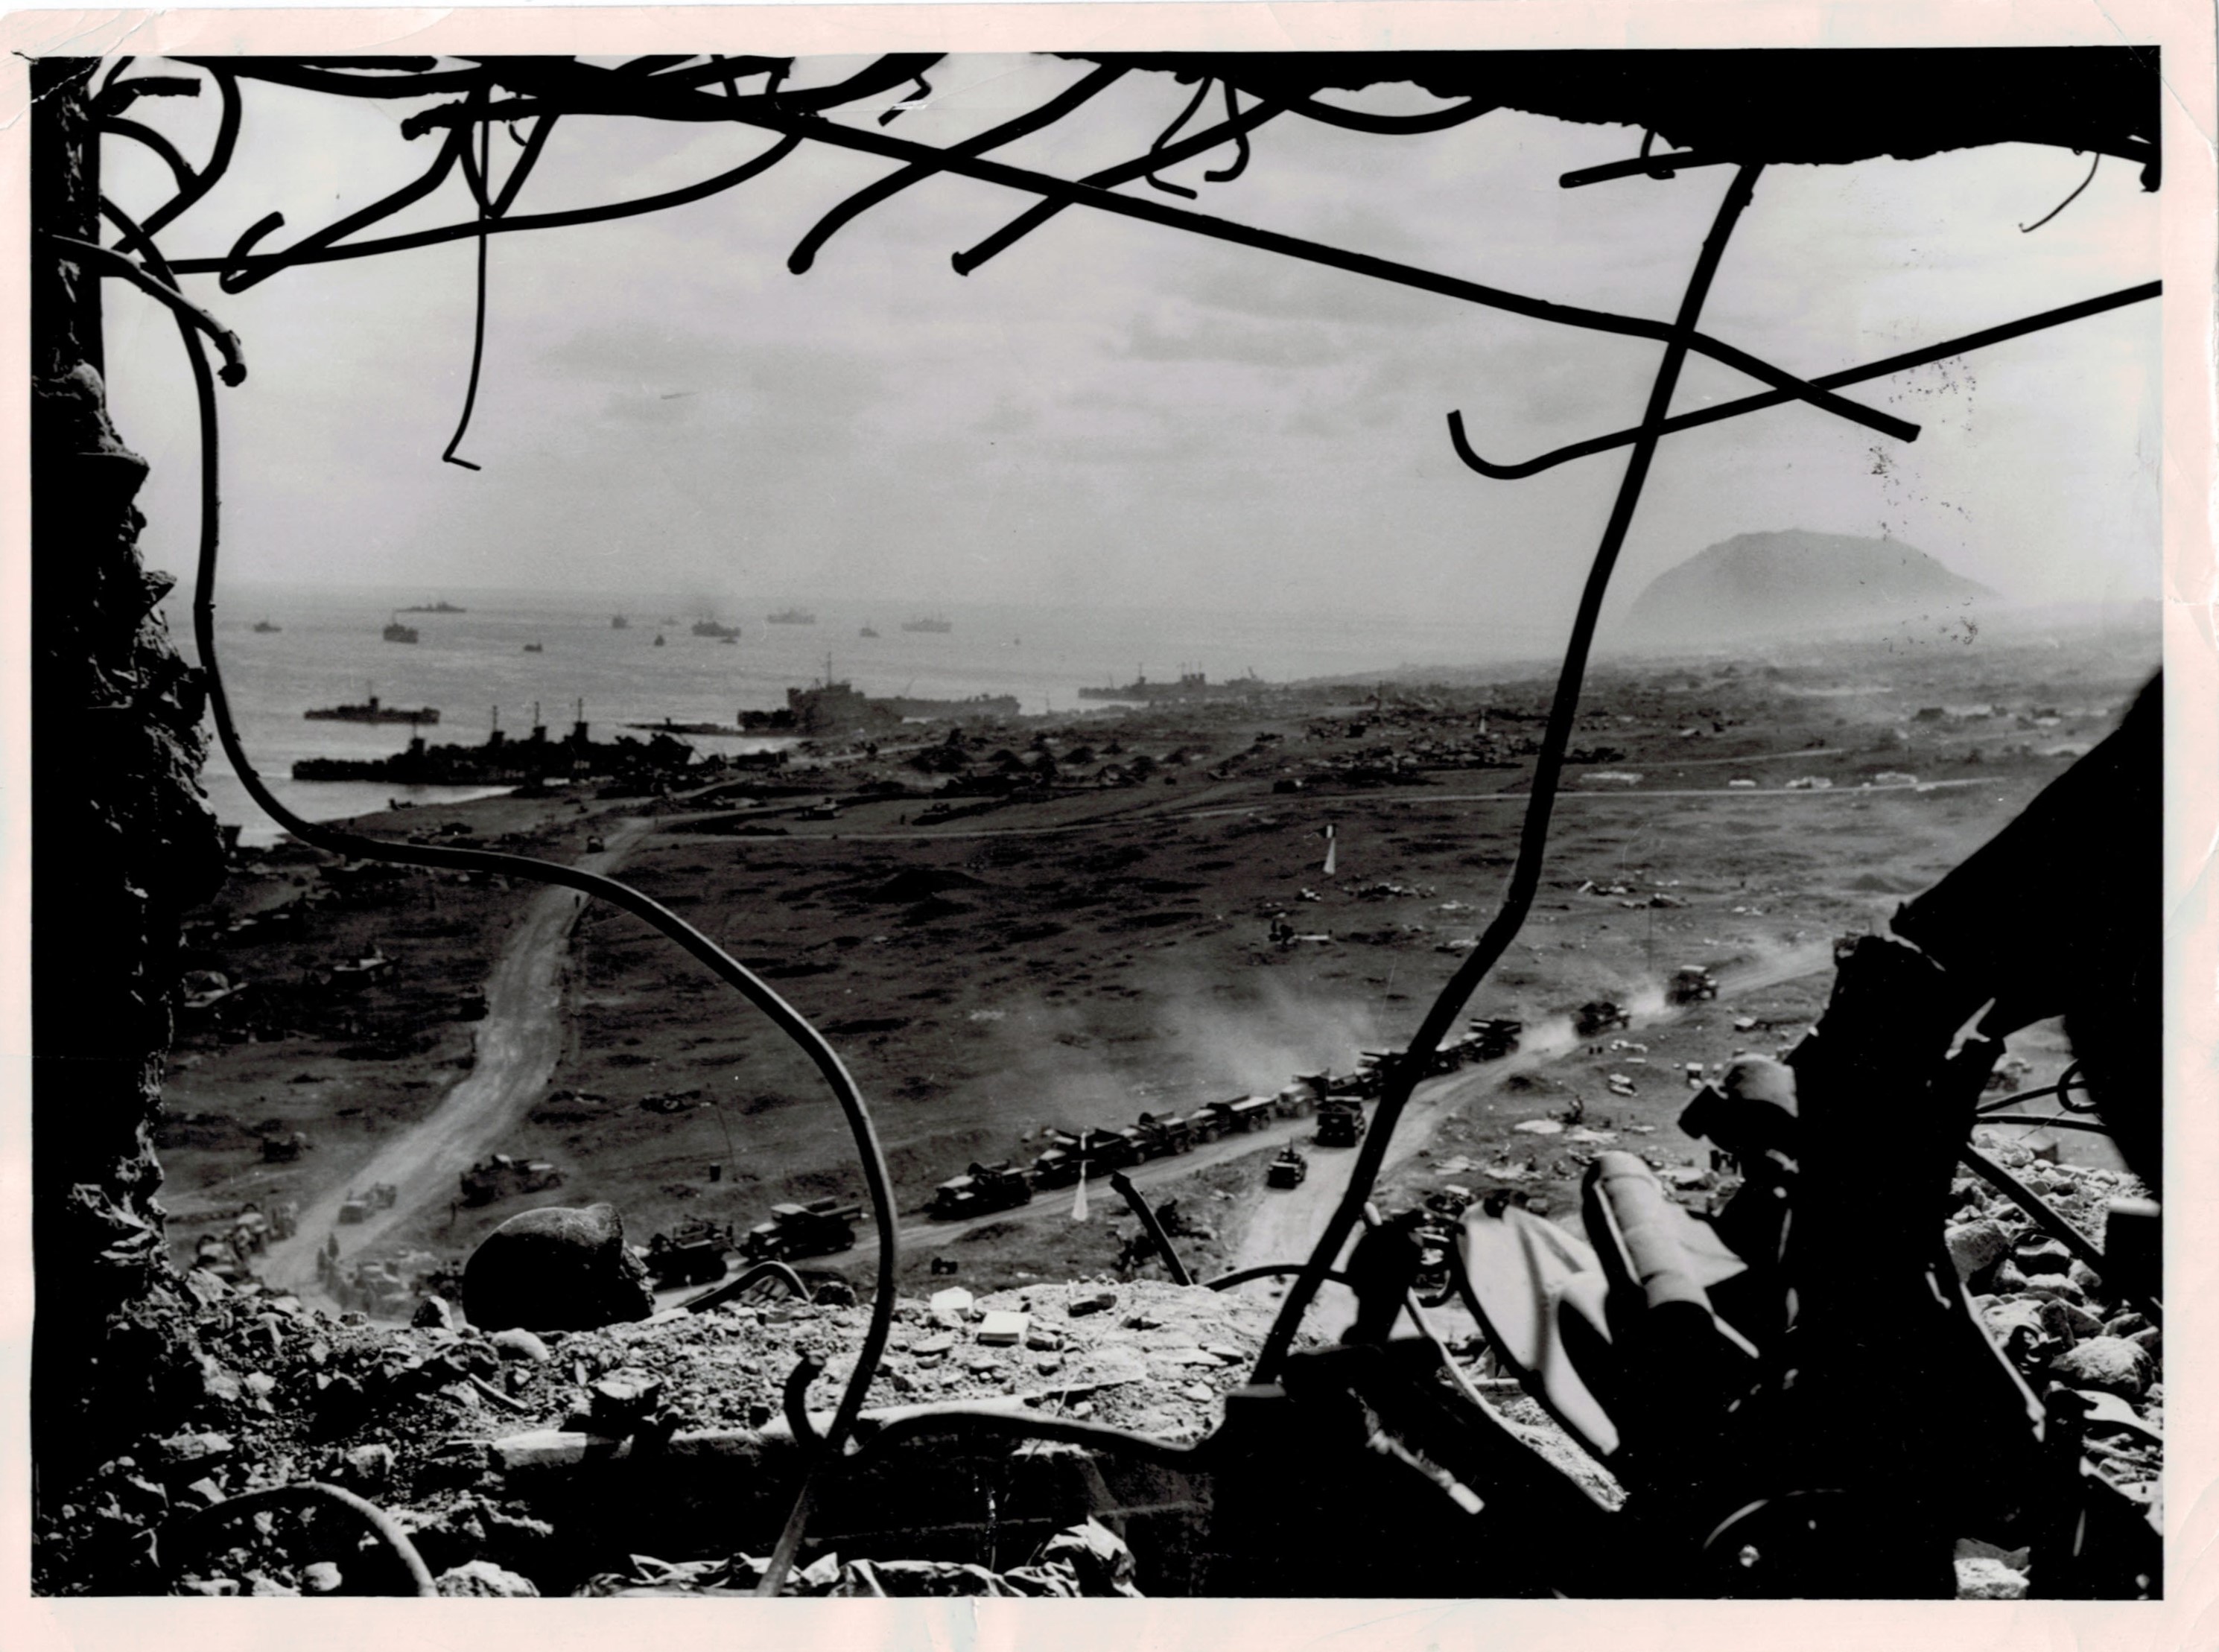 Eugene Smith/Life Pool: Coastal defense guns overlooking East landing beaches, Iwo Jima, March 29, 1945